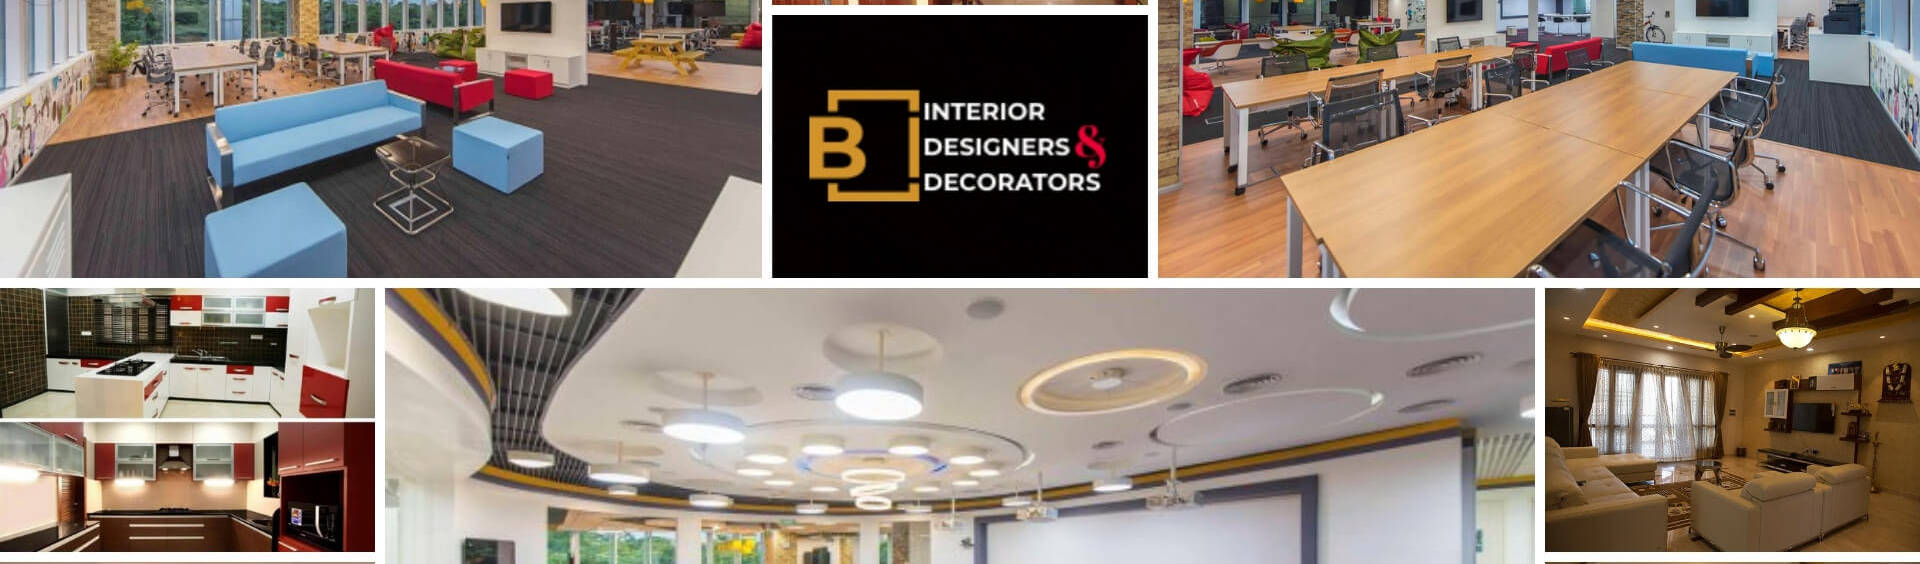 Bhavana Interiors Decorators